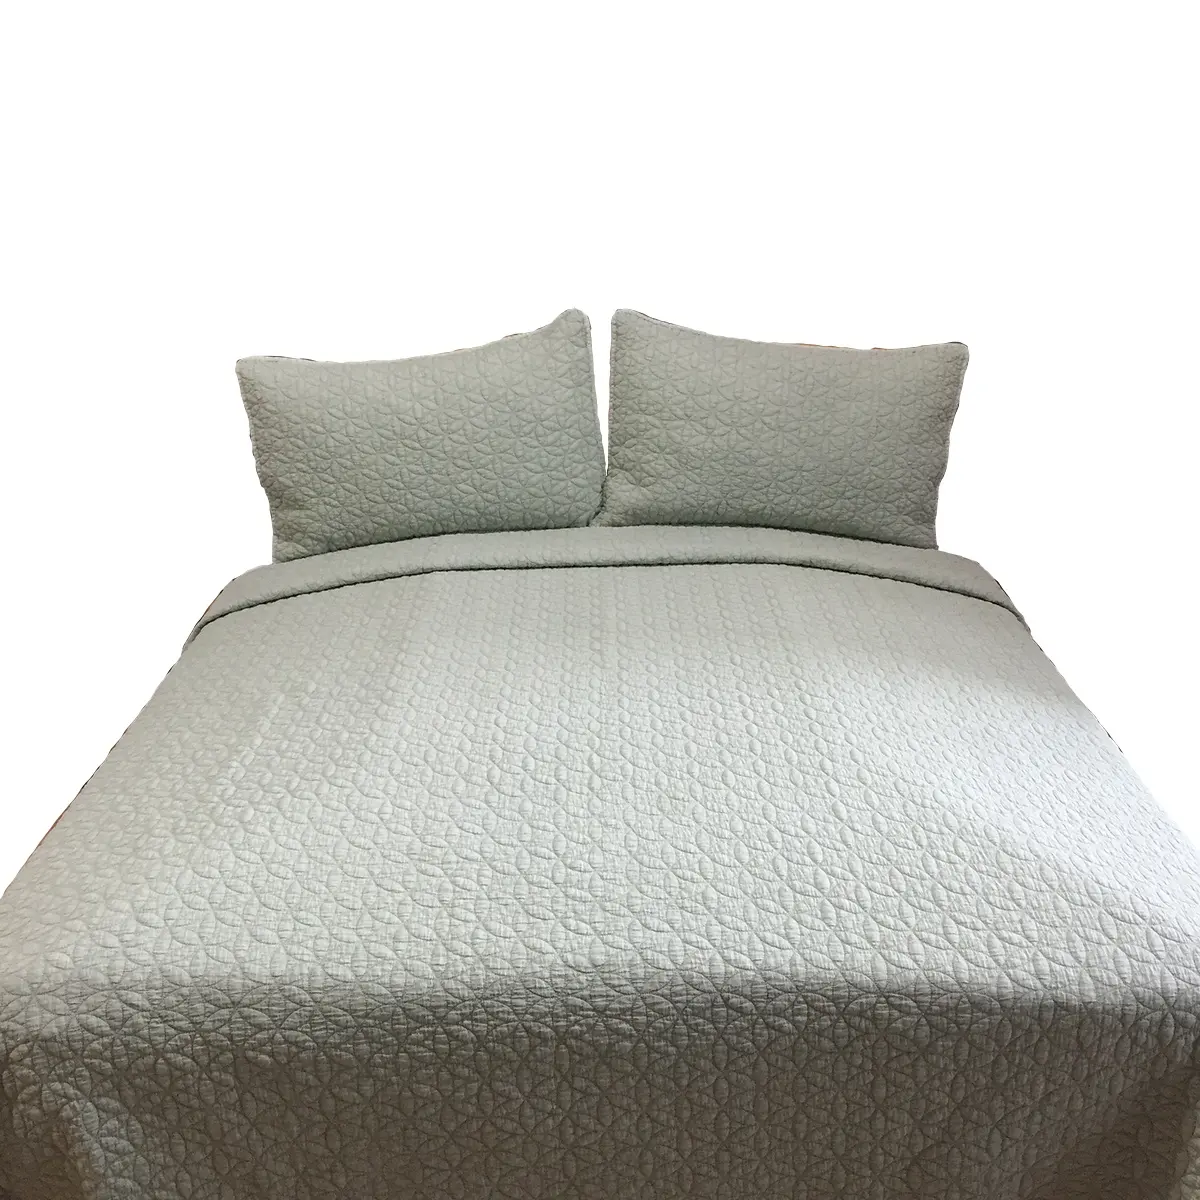 Hot sale Popular design for king size quilts bedding bedspreads